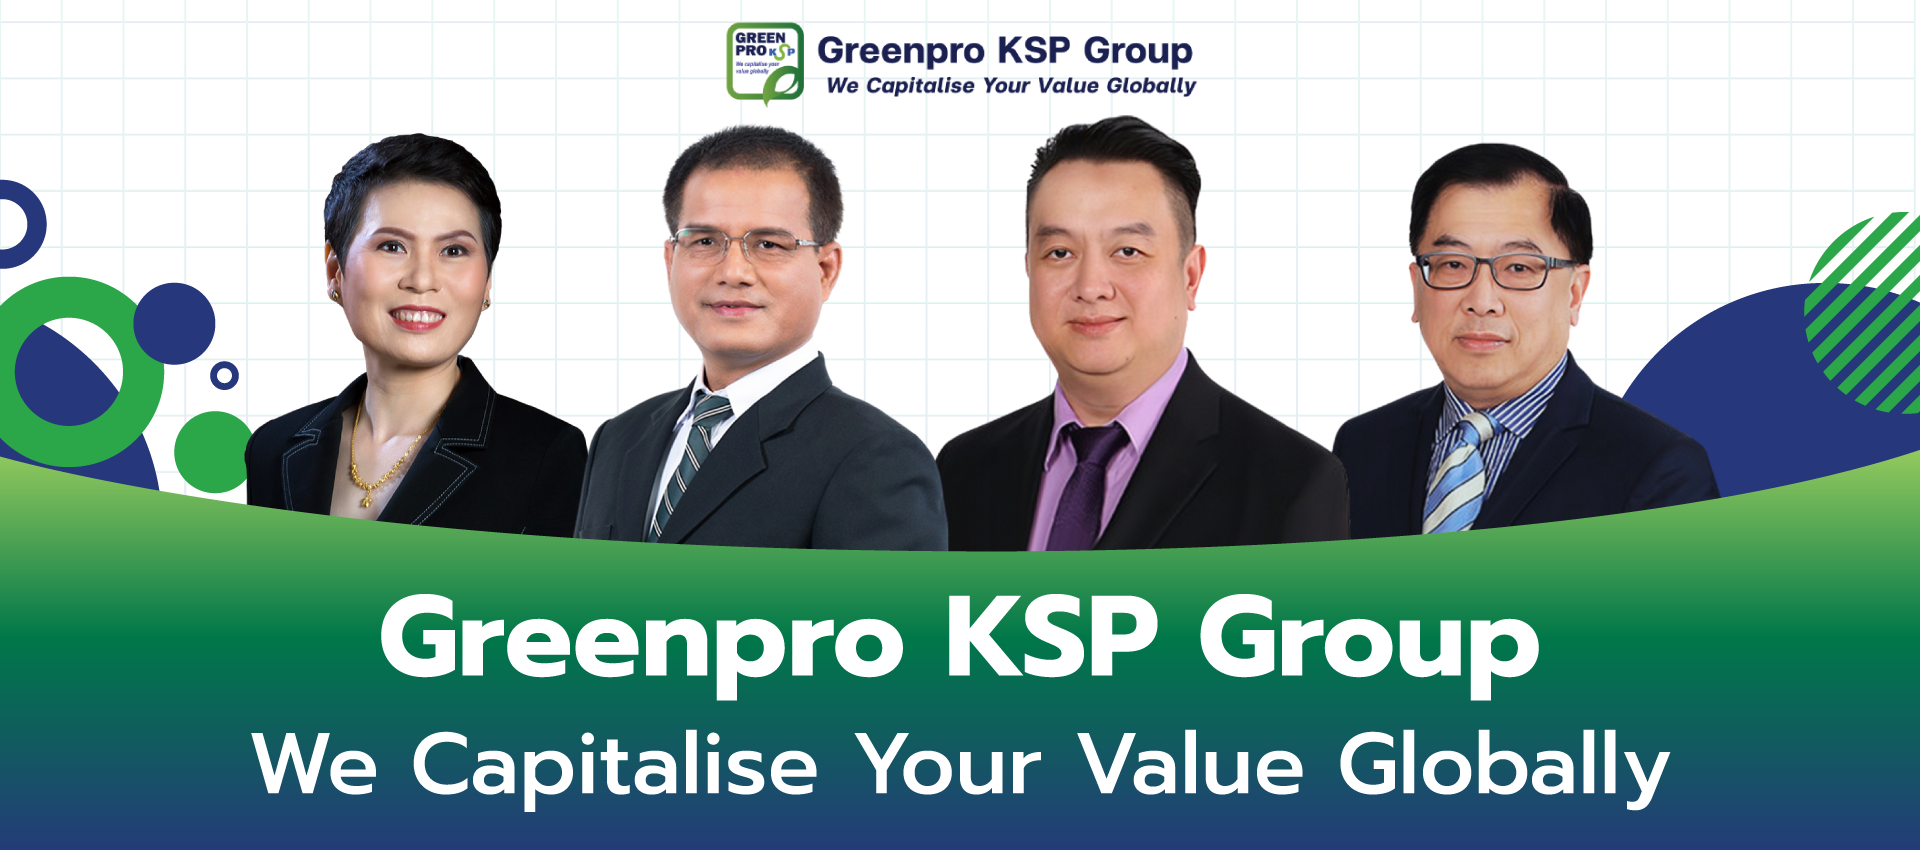 Greenpro KSP Group (1)